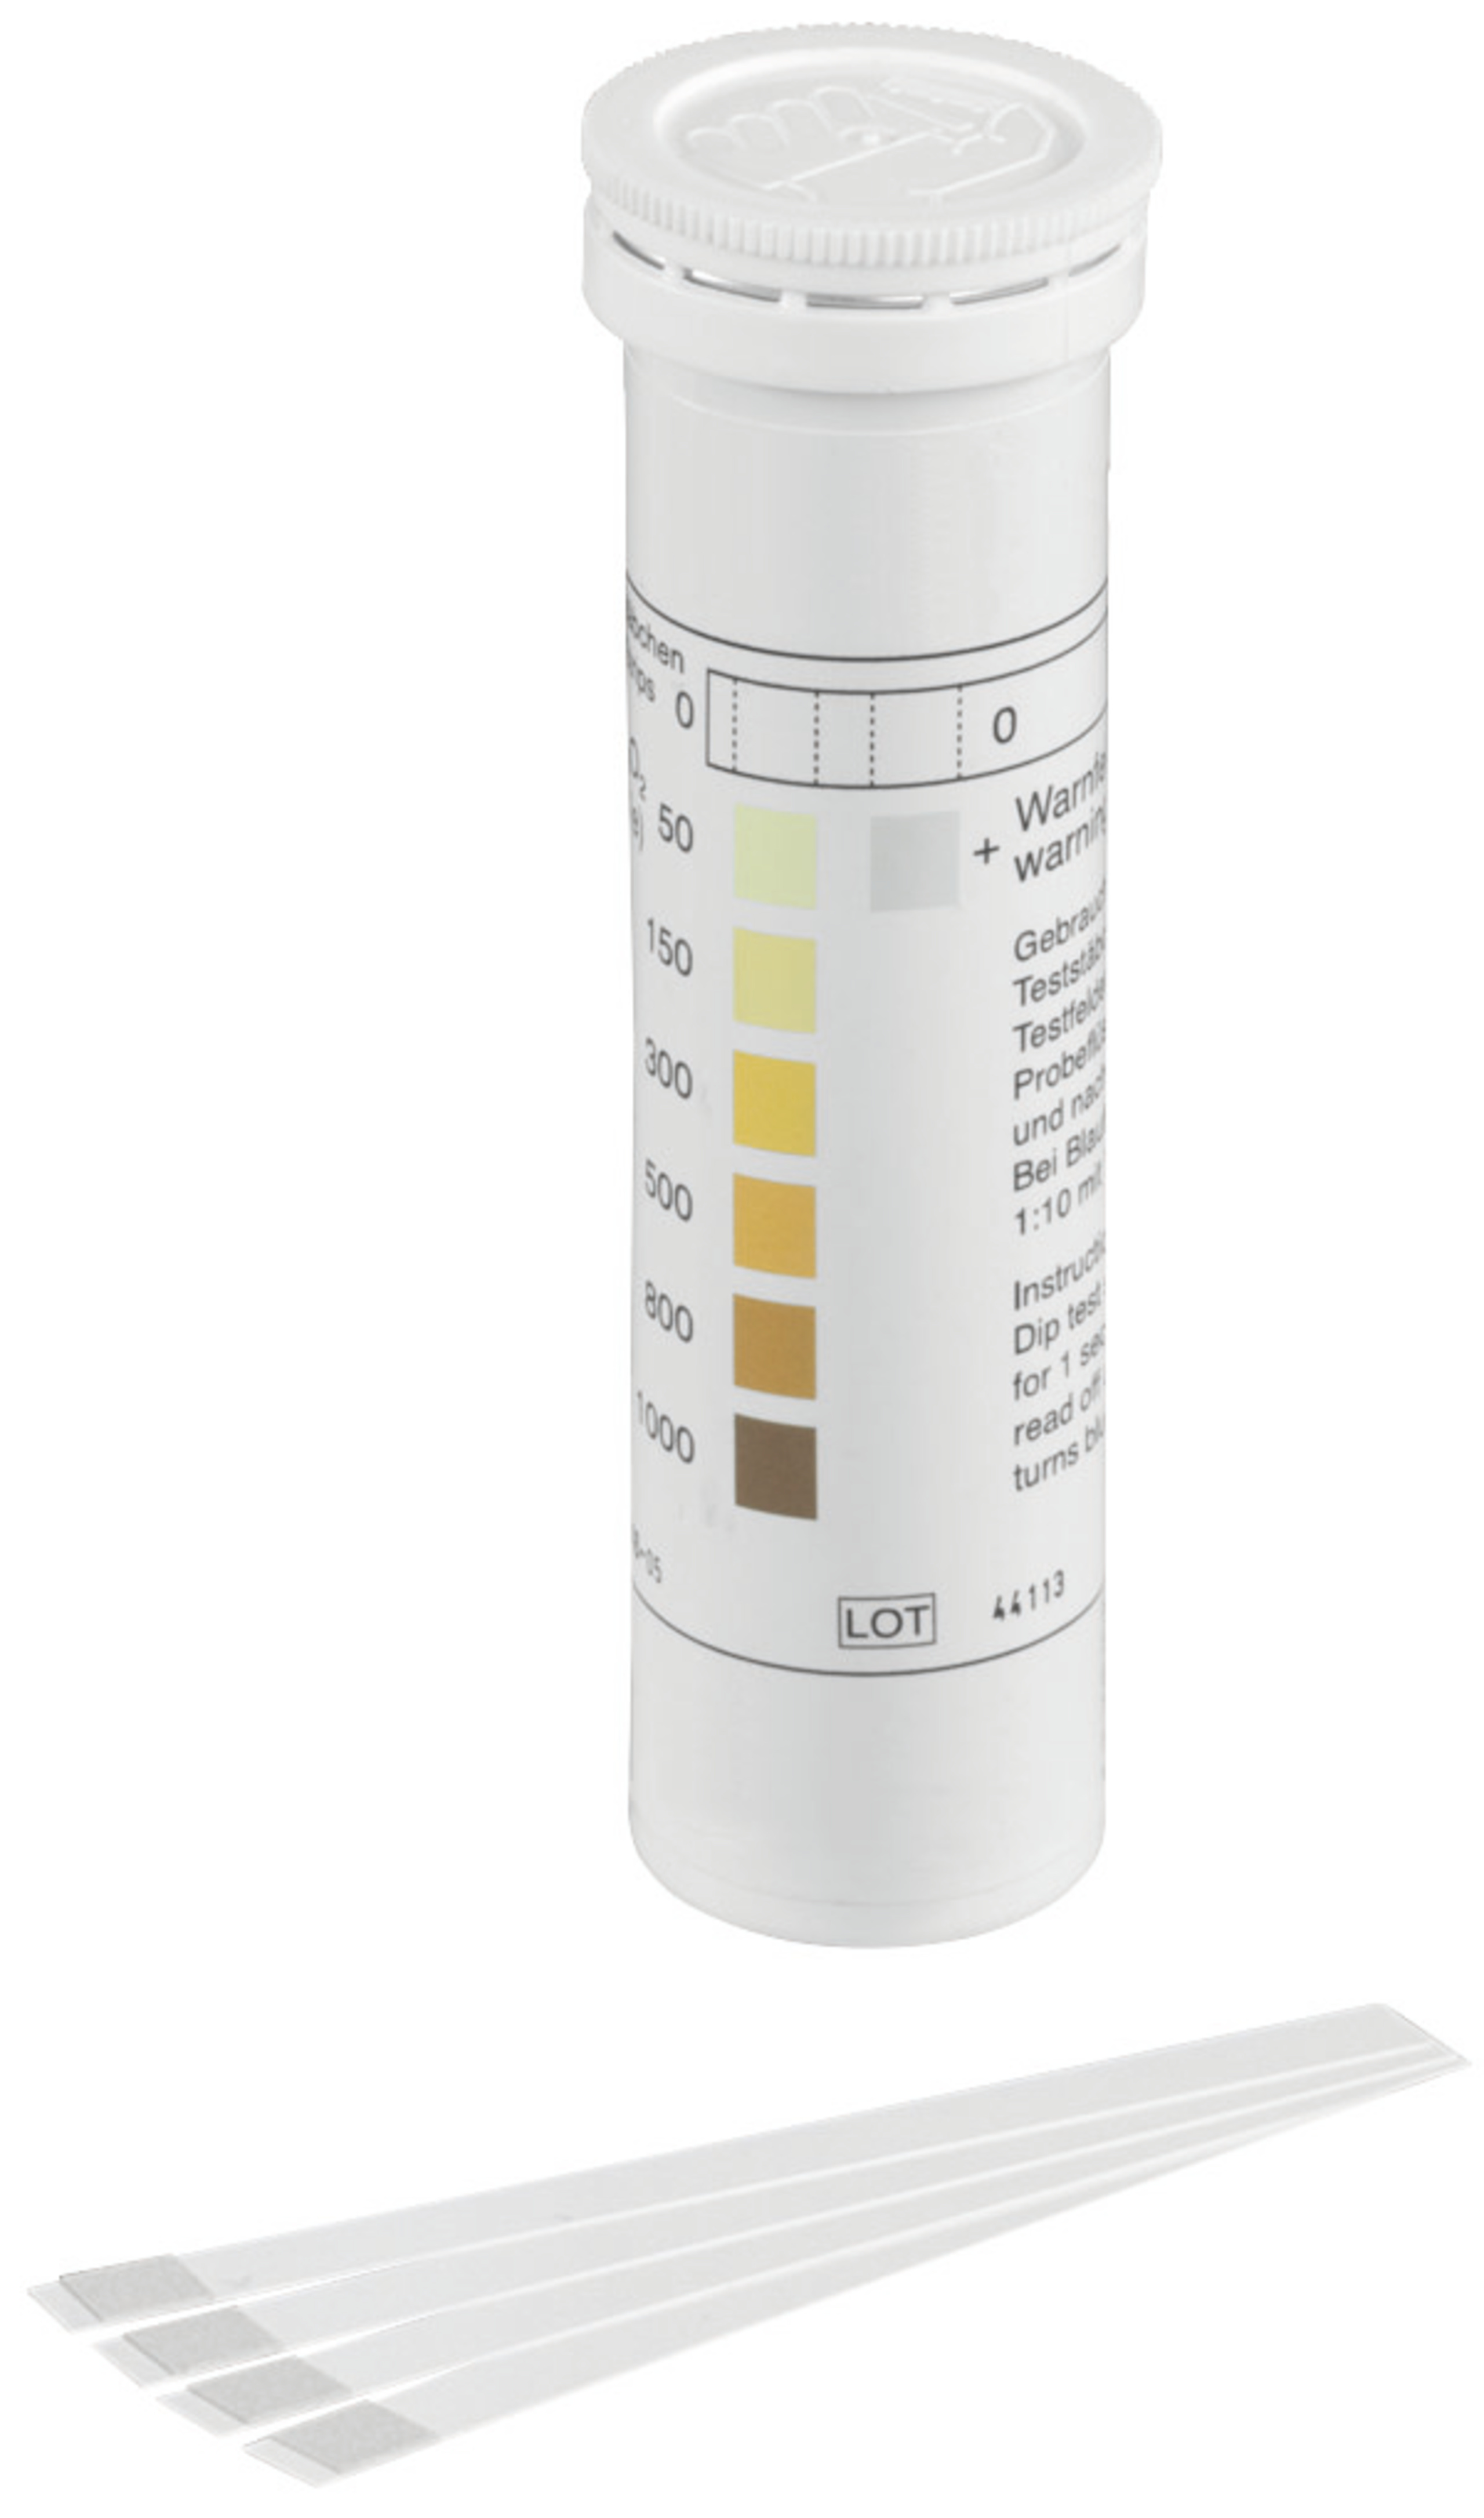 Rems Test H2O2 0-1000 mg/l 091072 - AG Náradie